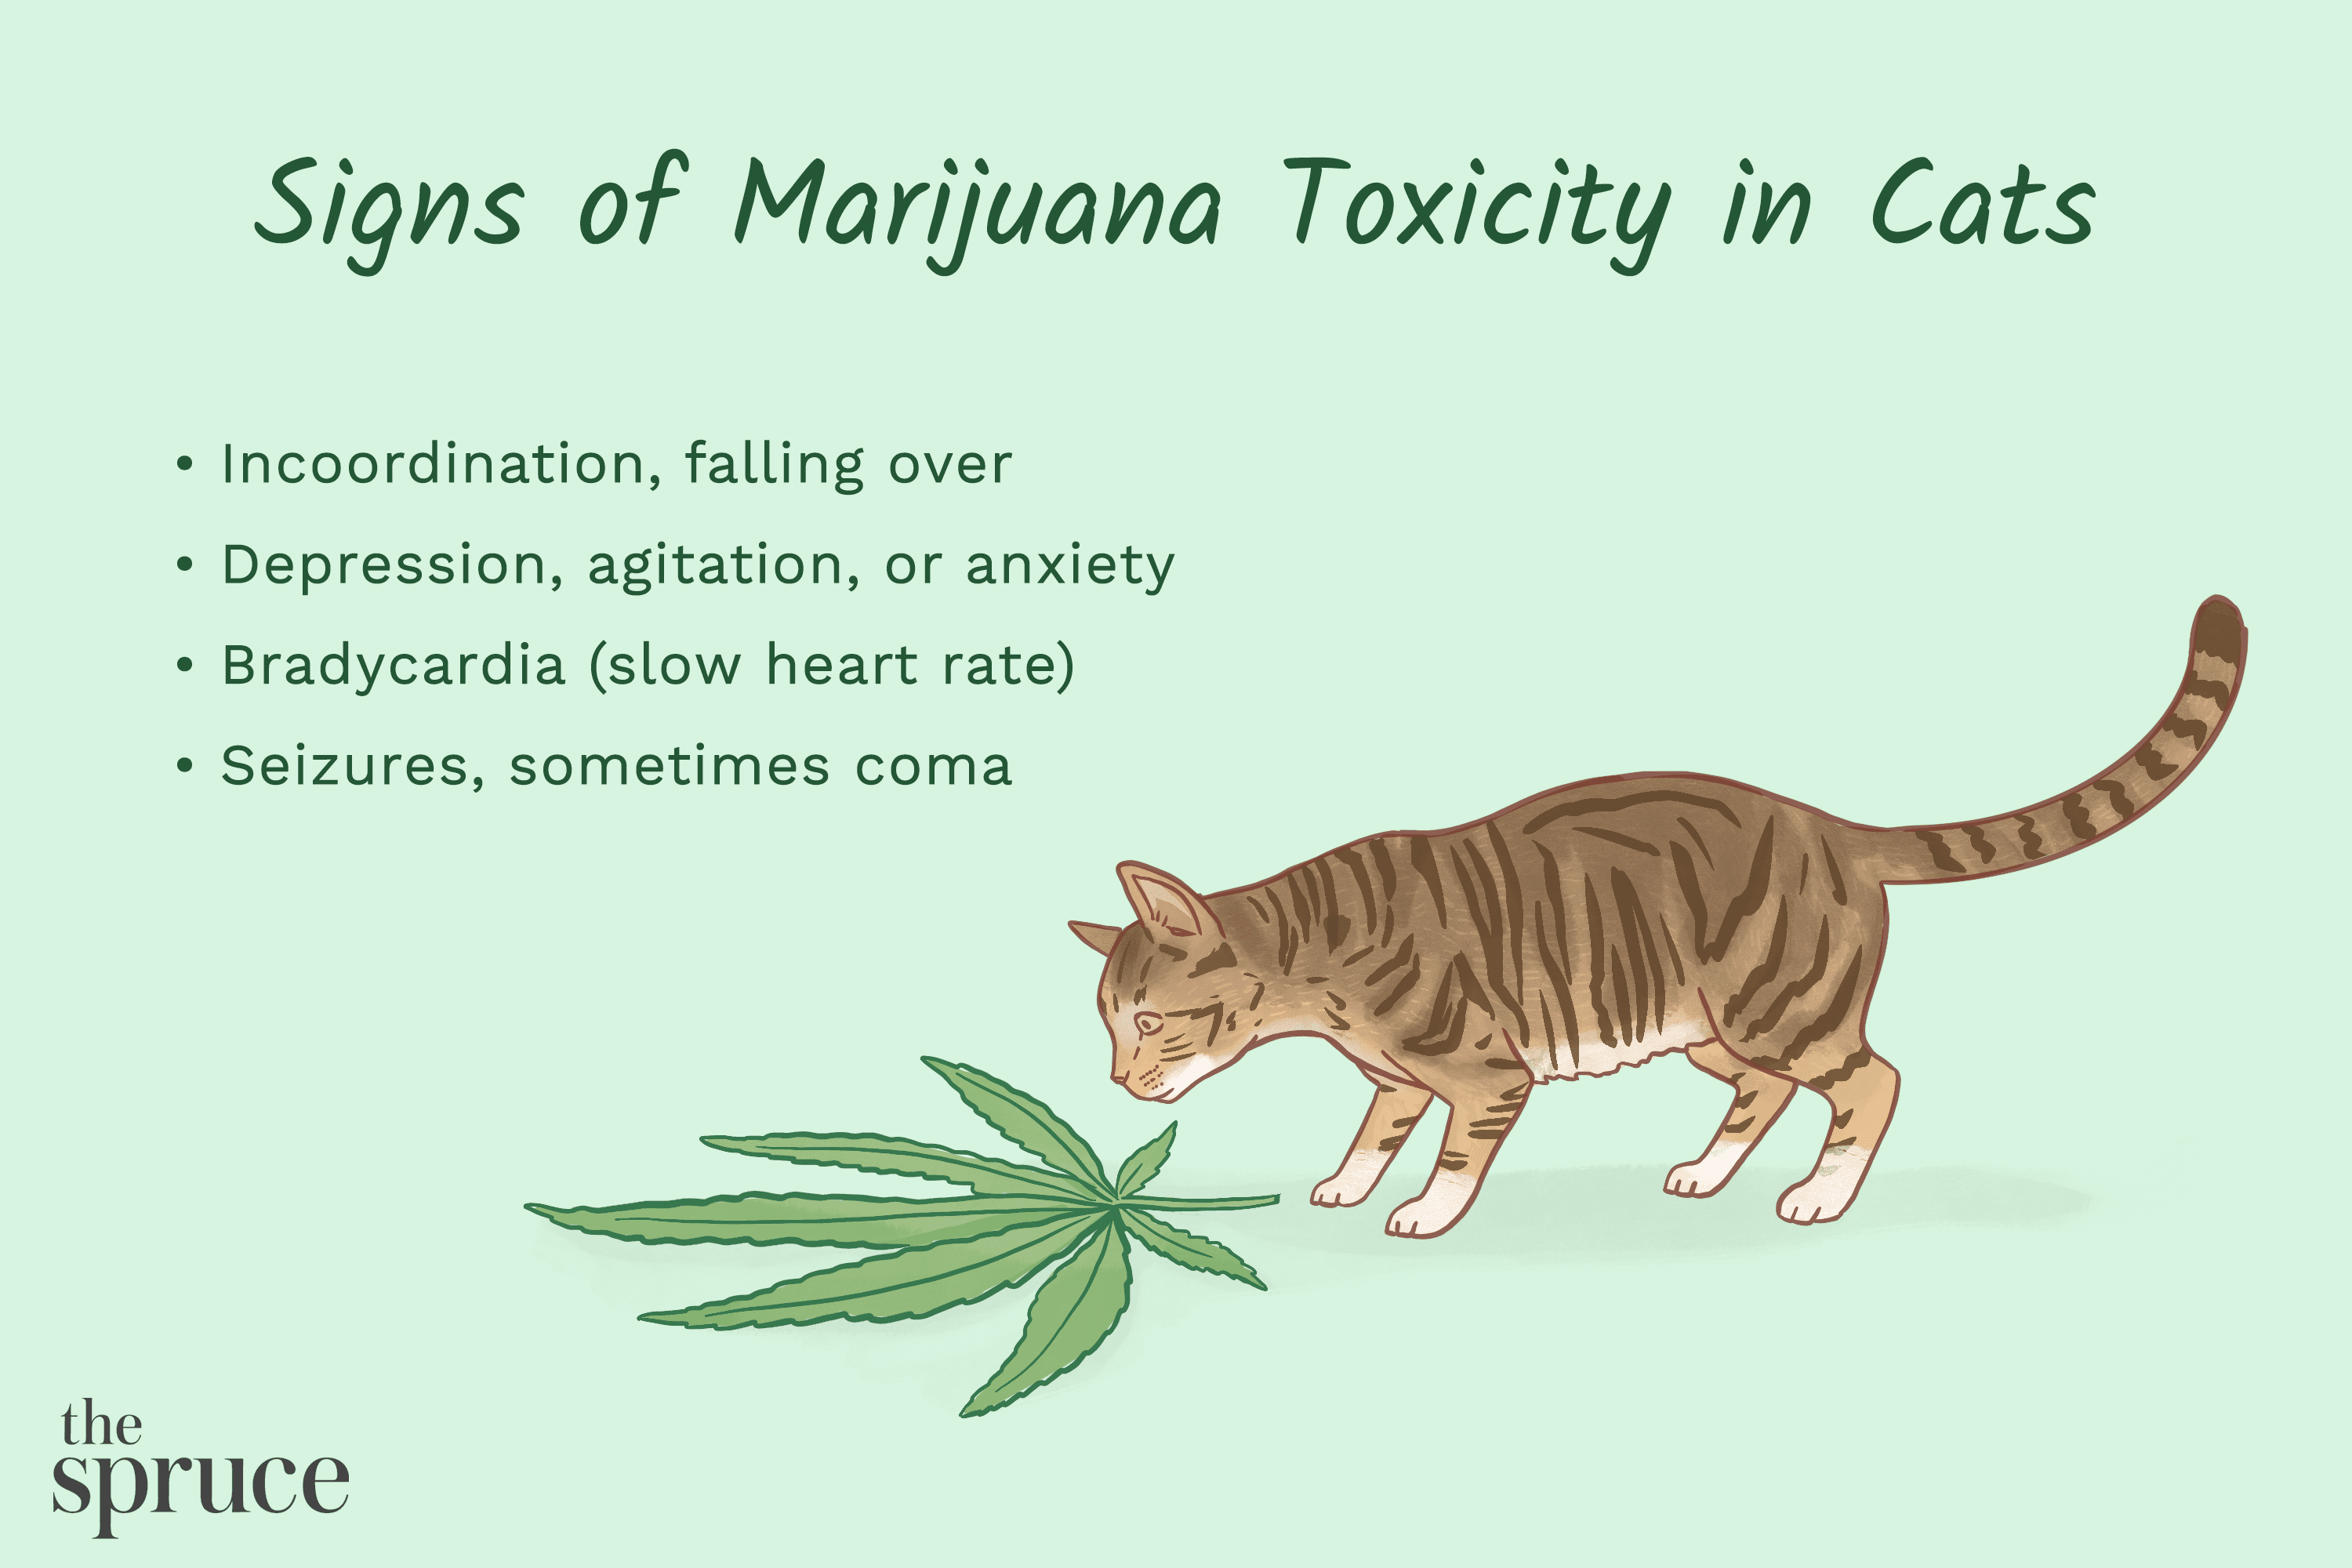 Marijuanatoxicitet hos katter